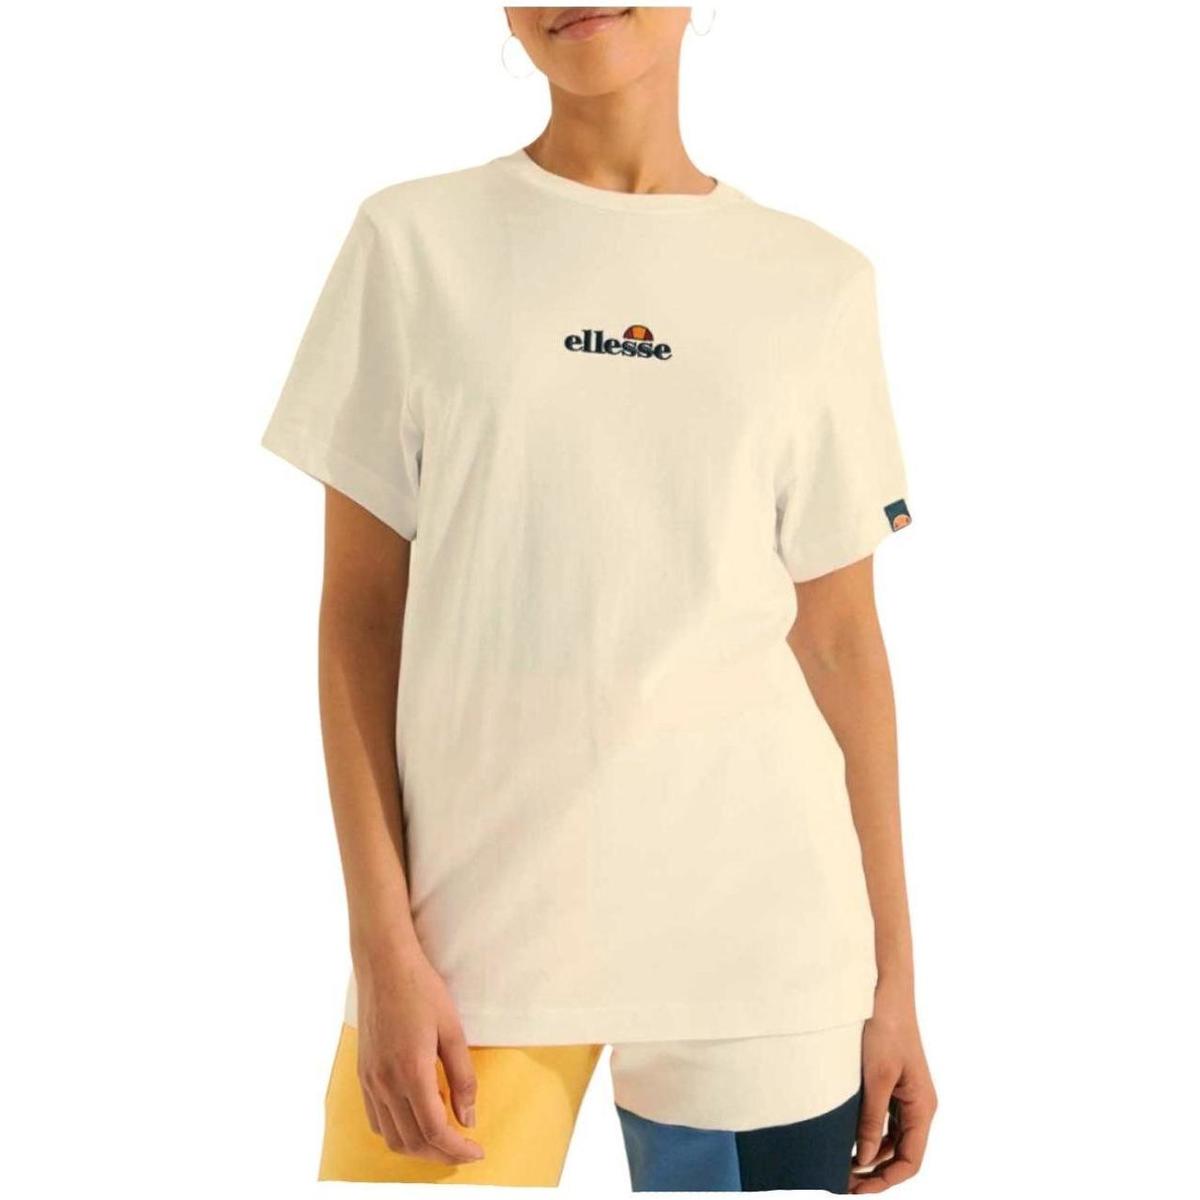 textil Dam T-shirts Ellesse  Beige